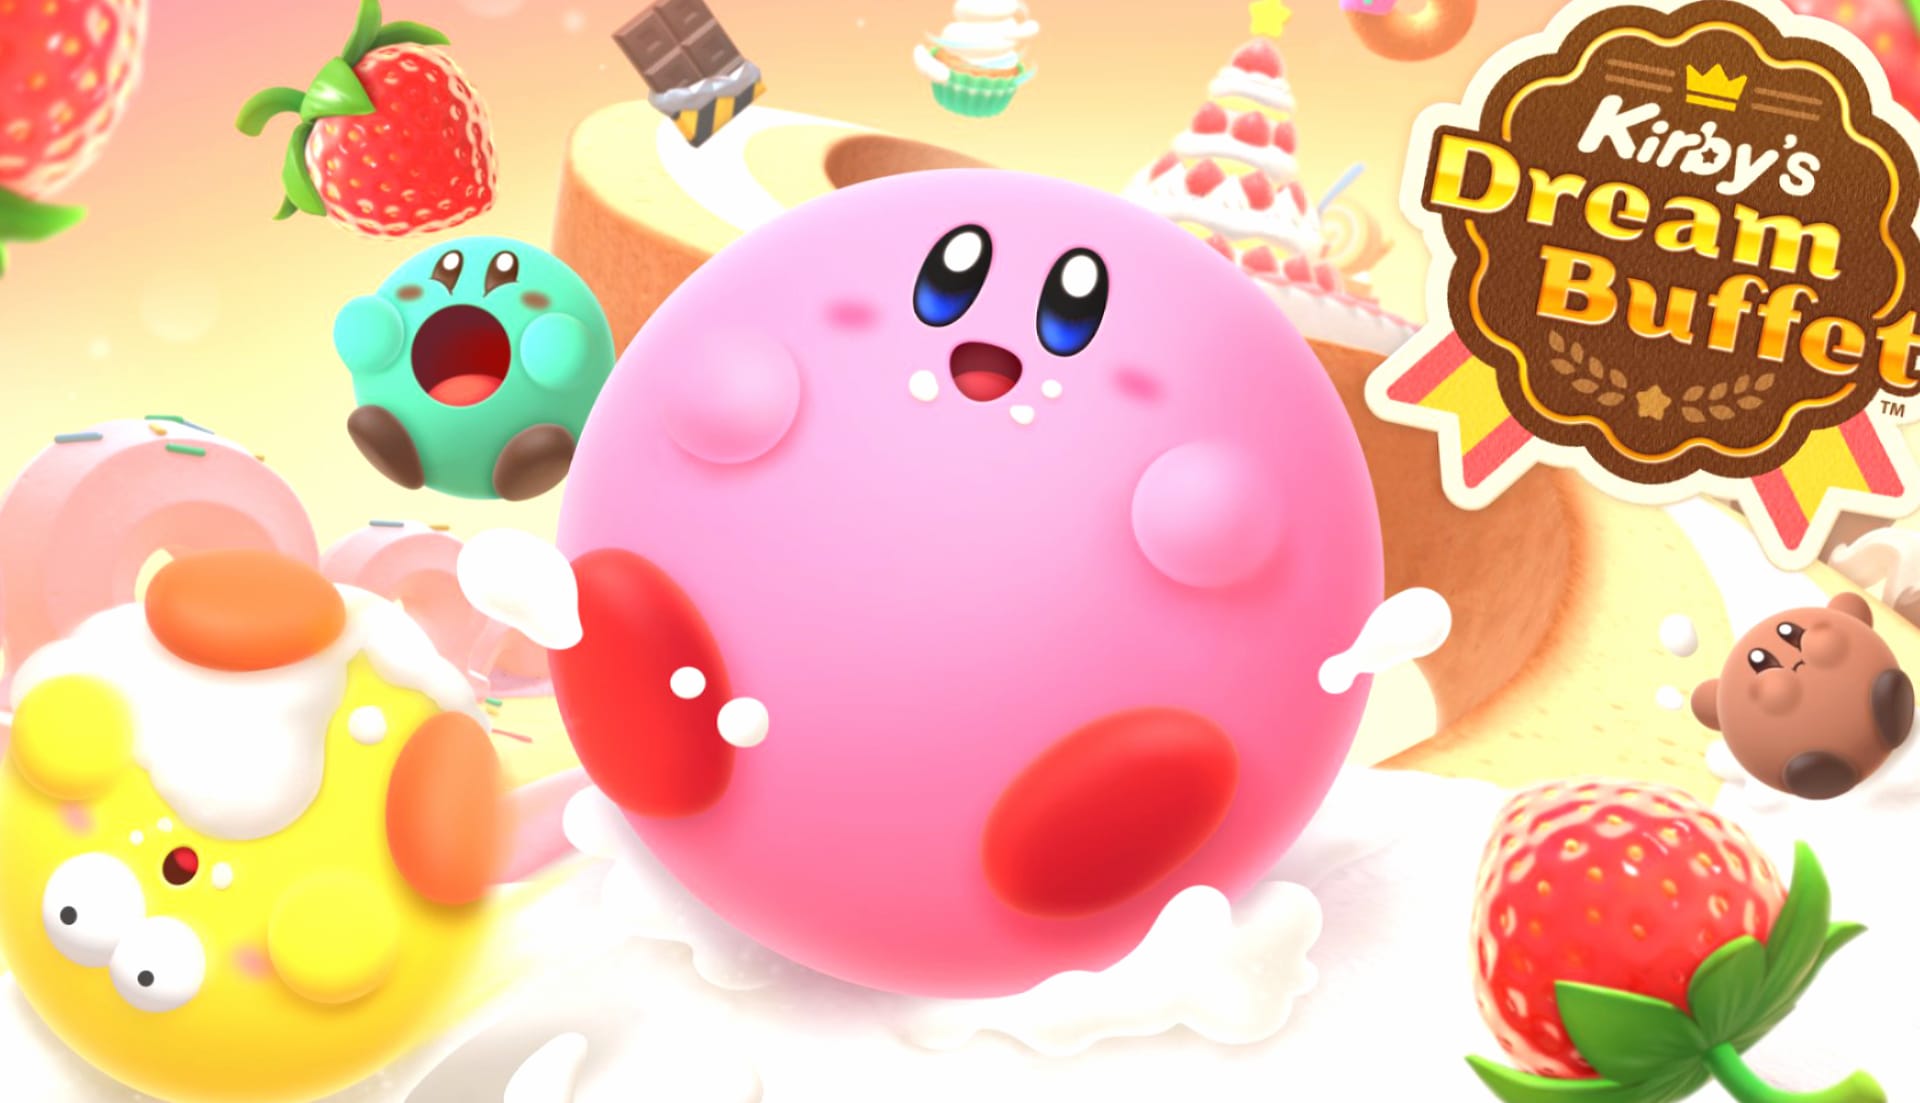 Kirbys Dream Buffet wallpapers HD quality